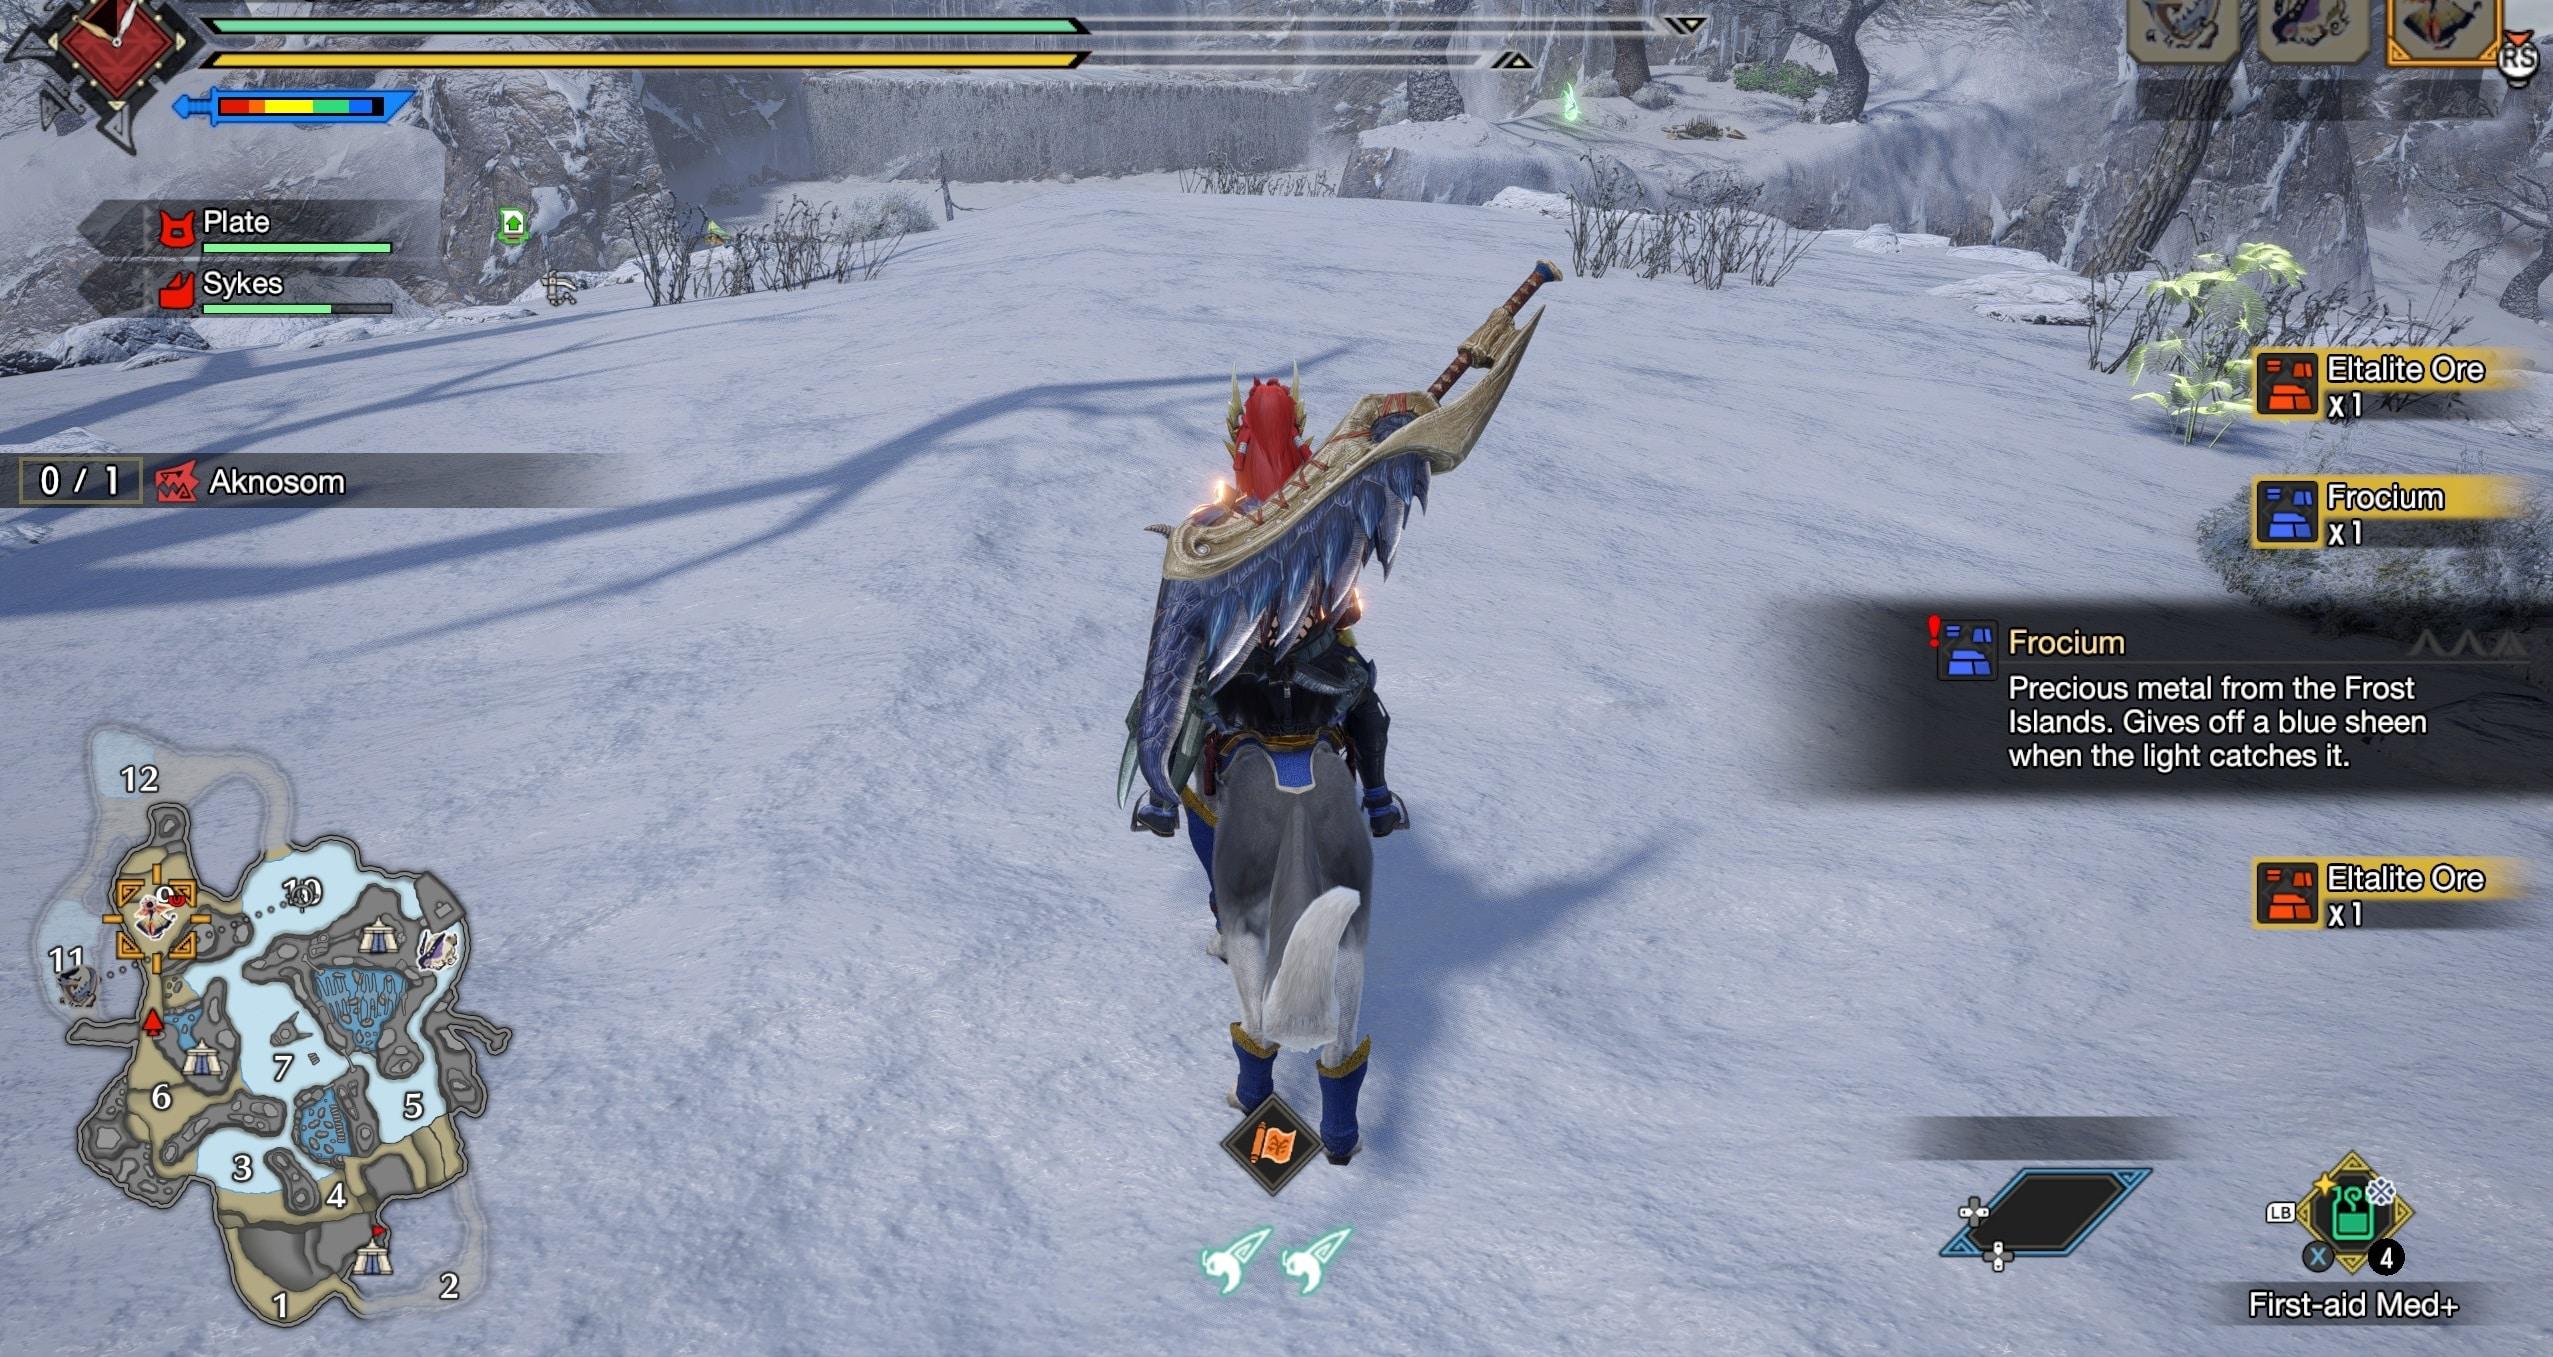 in-game screenshot of Monster Hunter Rise: Sunbreak showing Frocium ore locations.